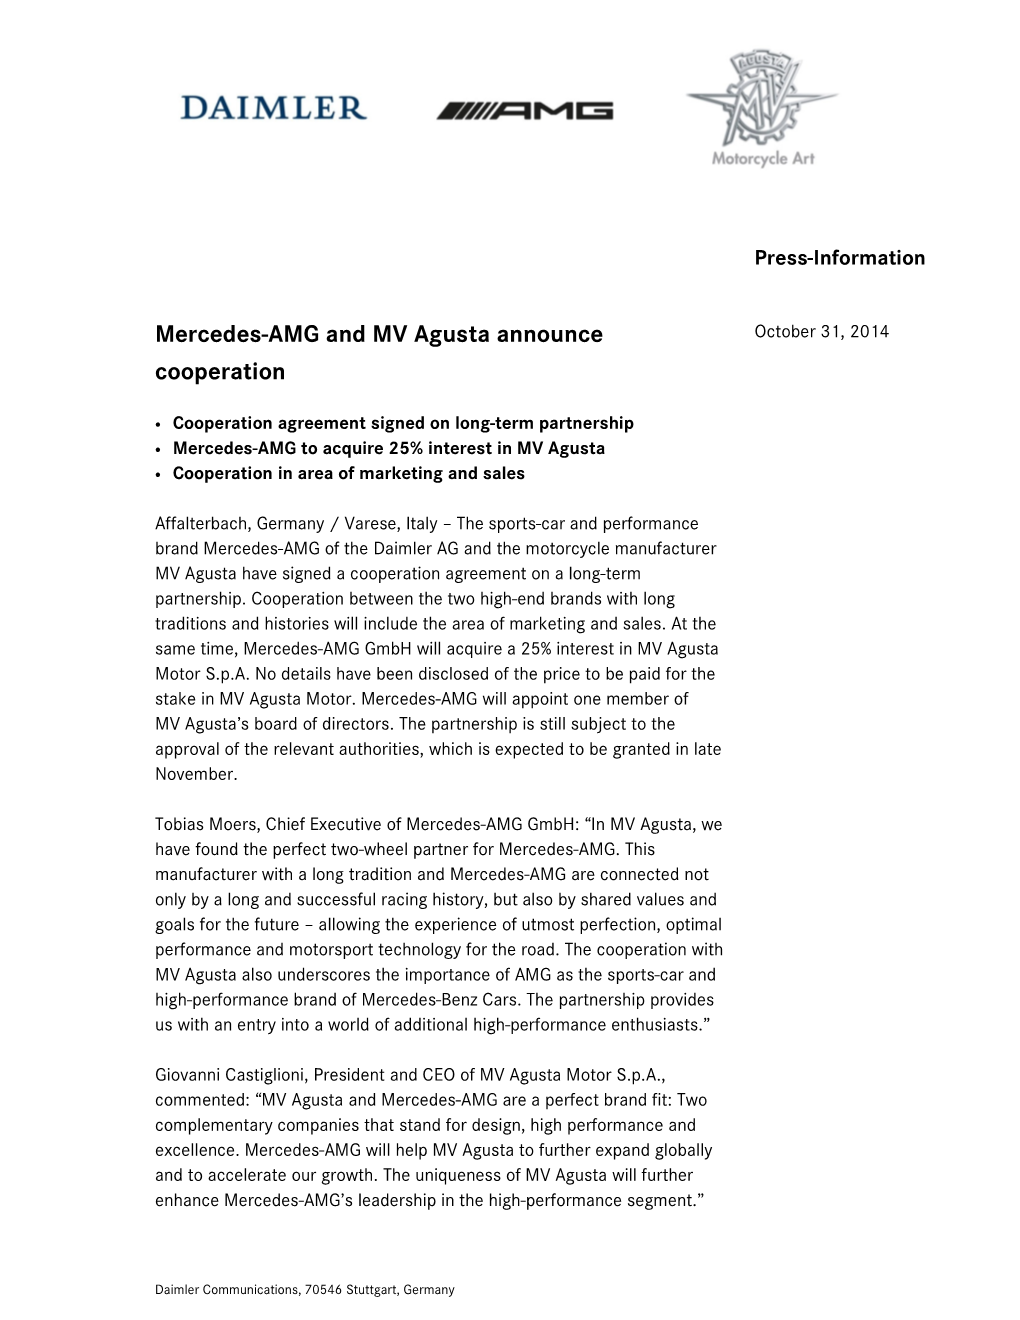 20141031 Daimler Press Information Cooperation AMG MV